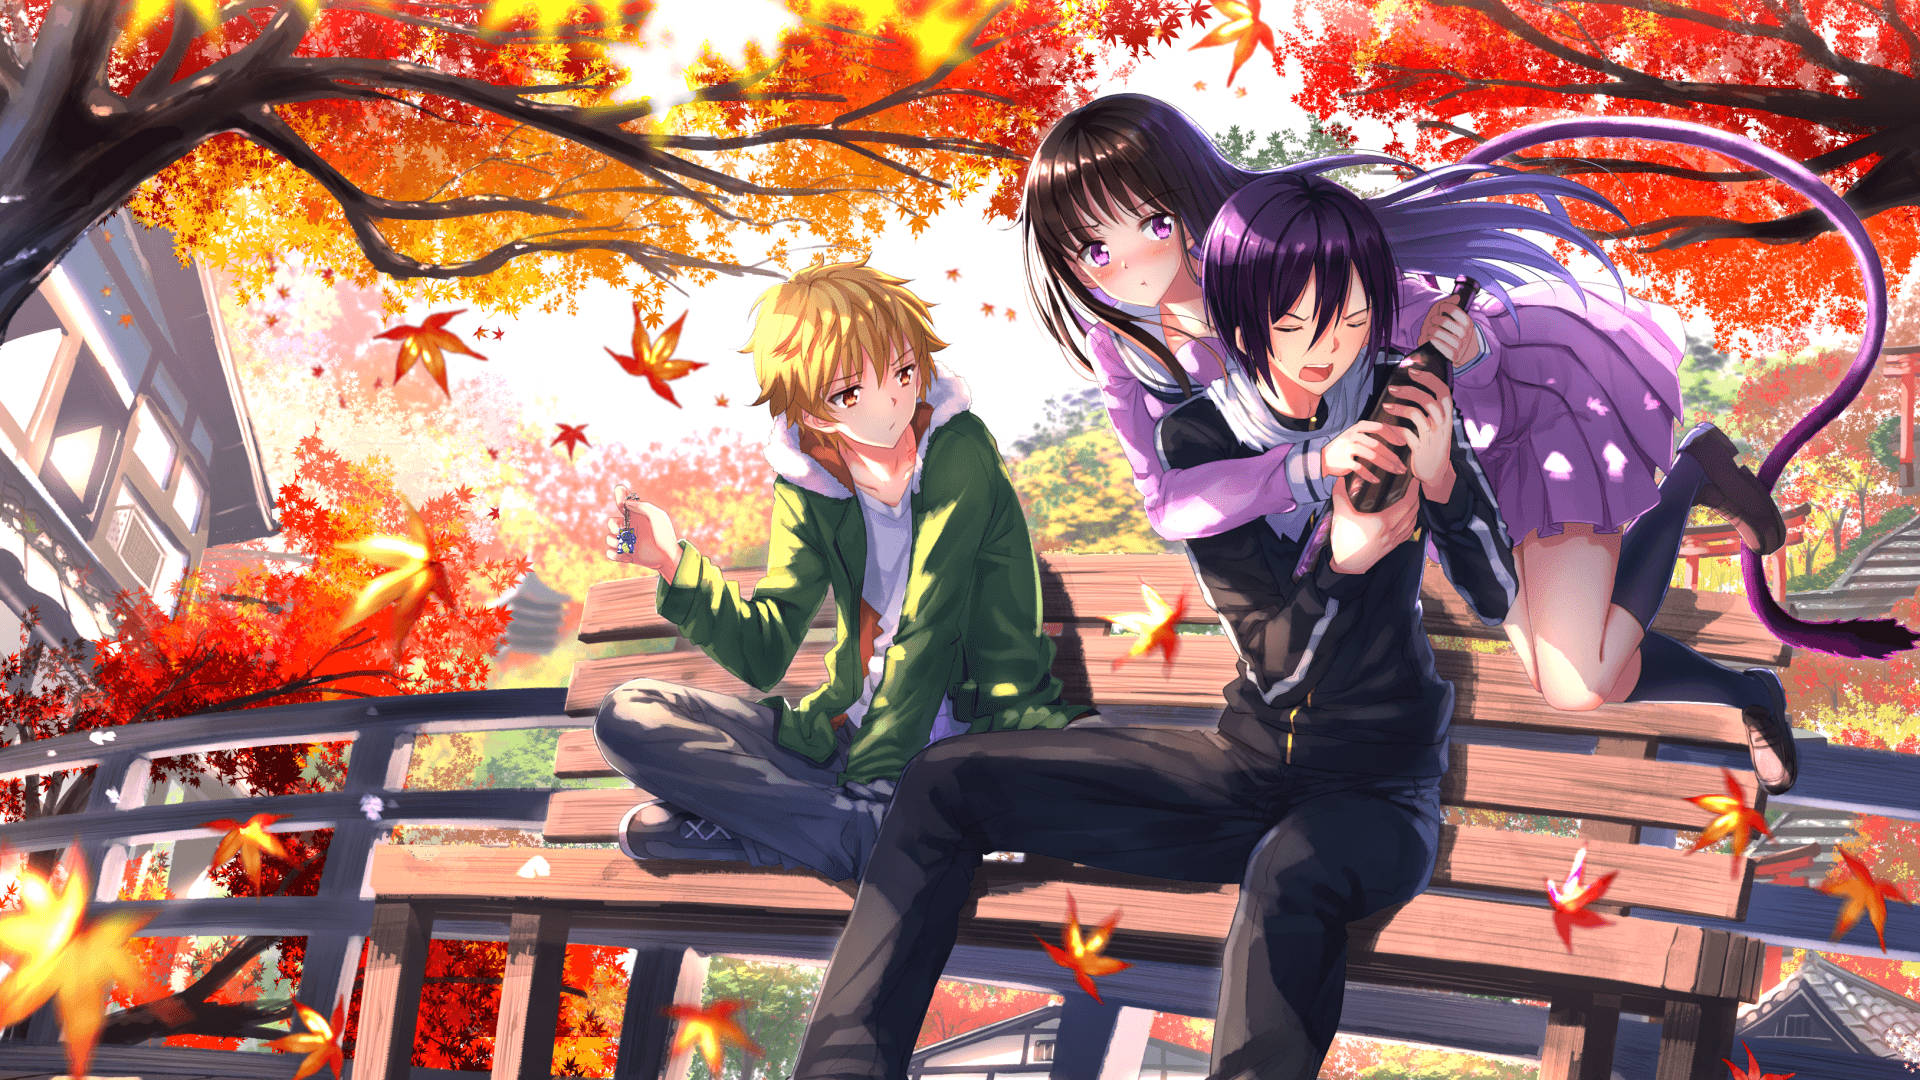 Noragami Autumn Trees Park Background